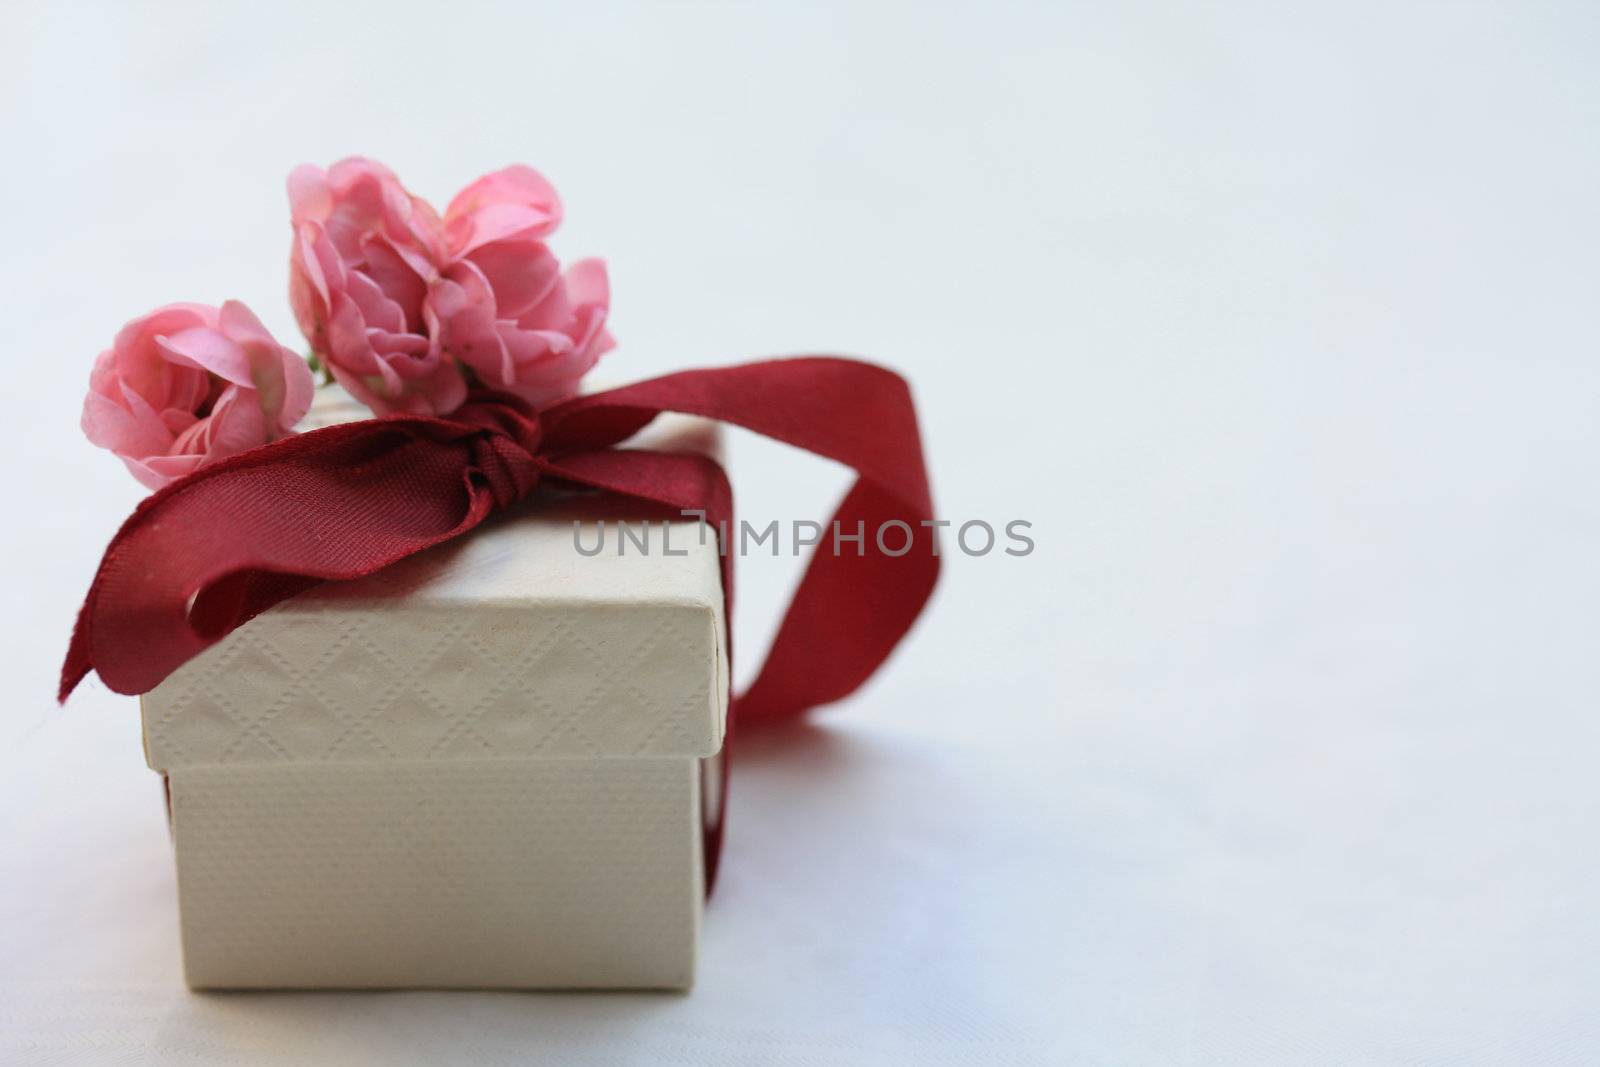 ring box with ribbon and roses